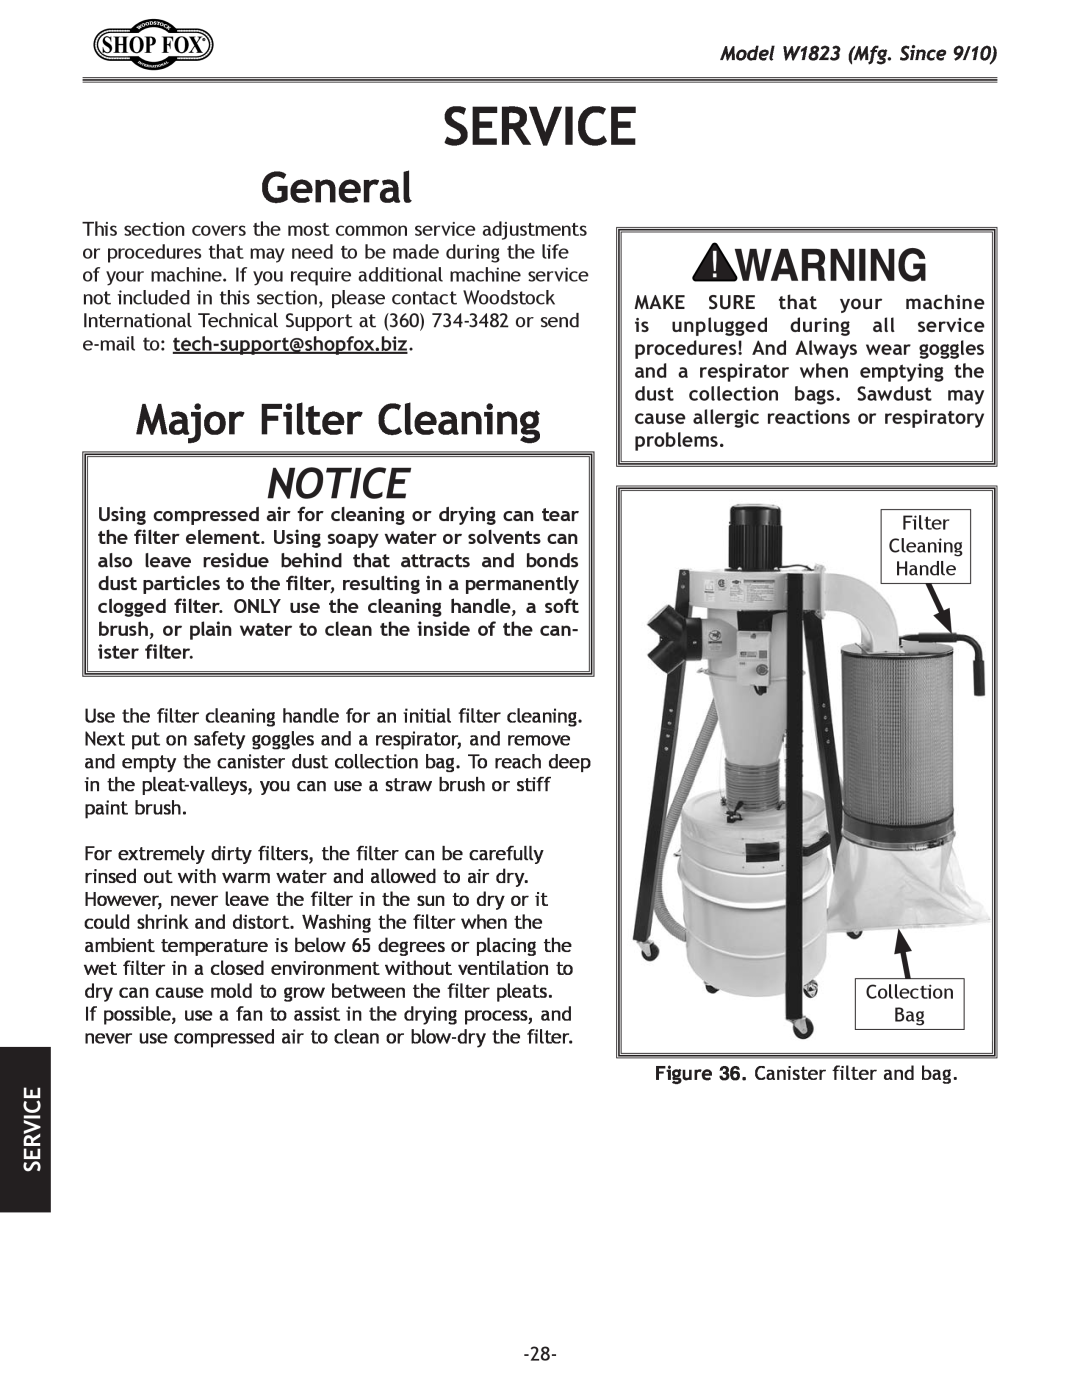 Woodstock manual Service, Major Filter Cleaning, General, Model W1823 Mfg. Since 9/10 